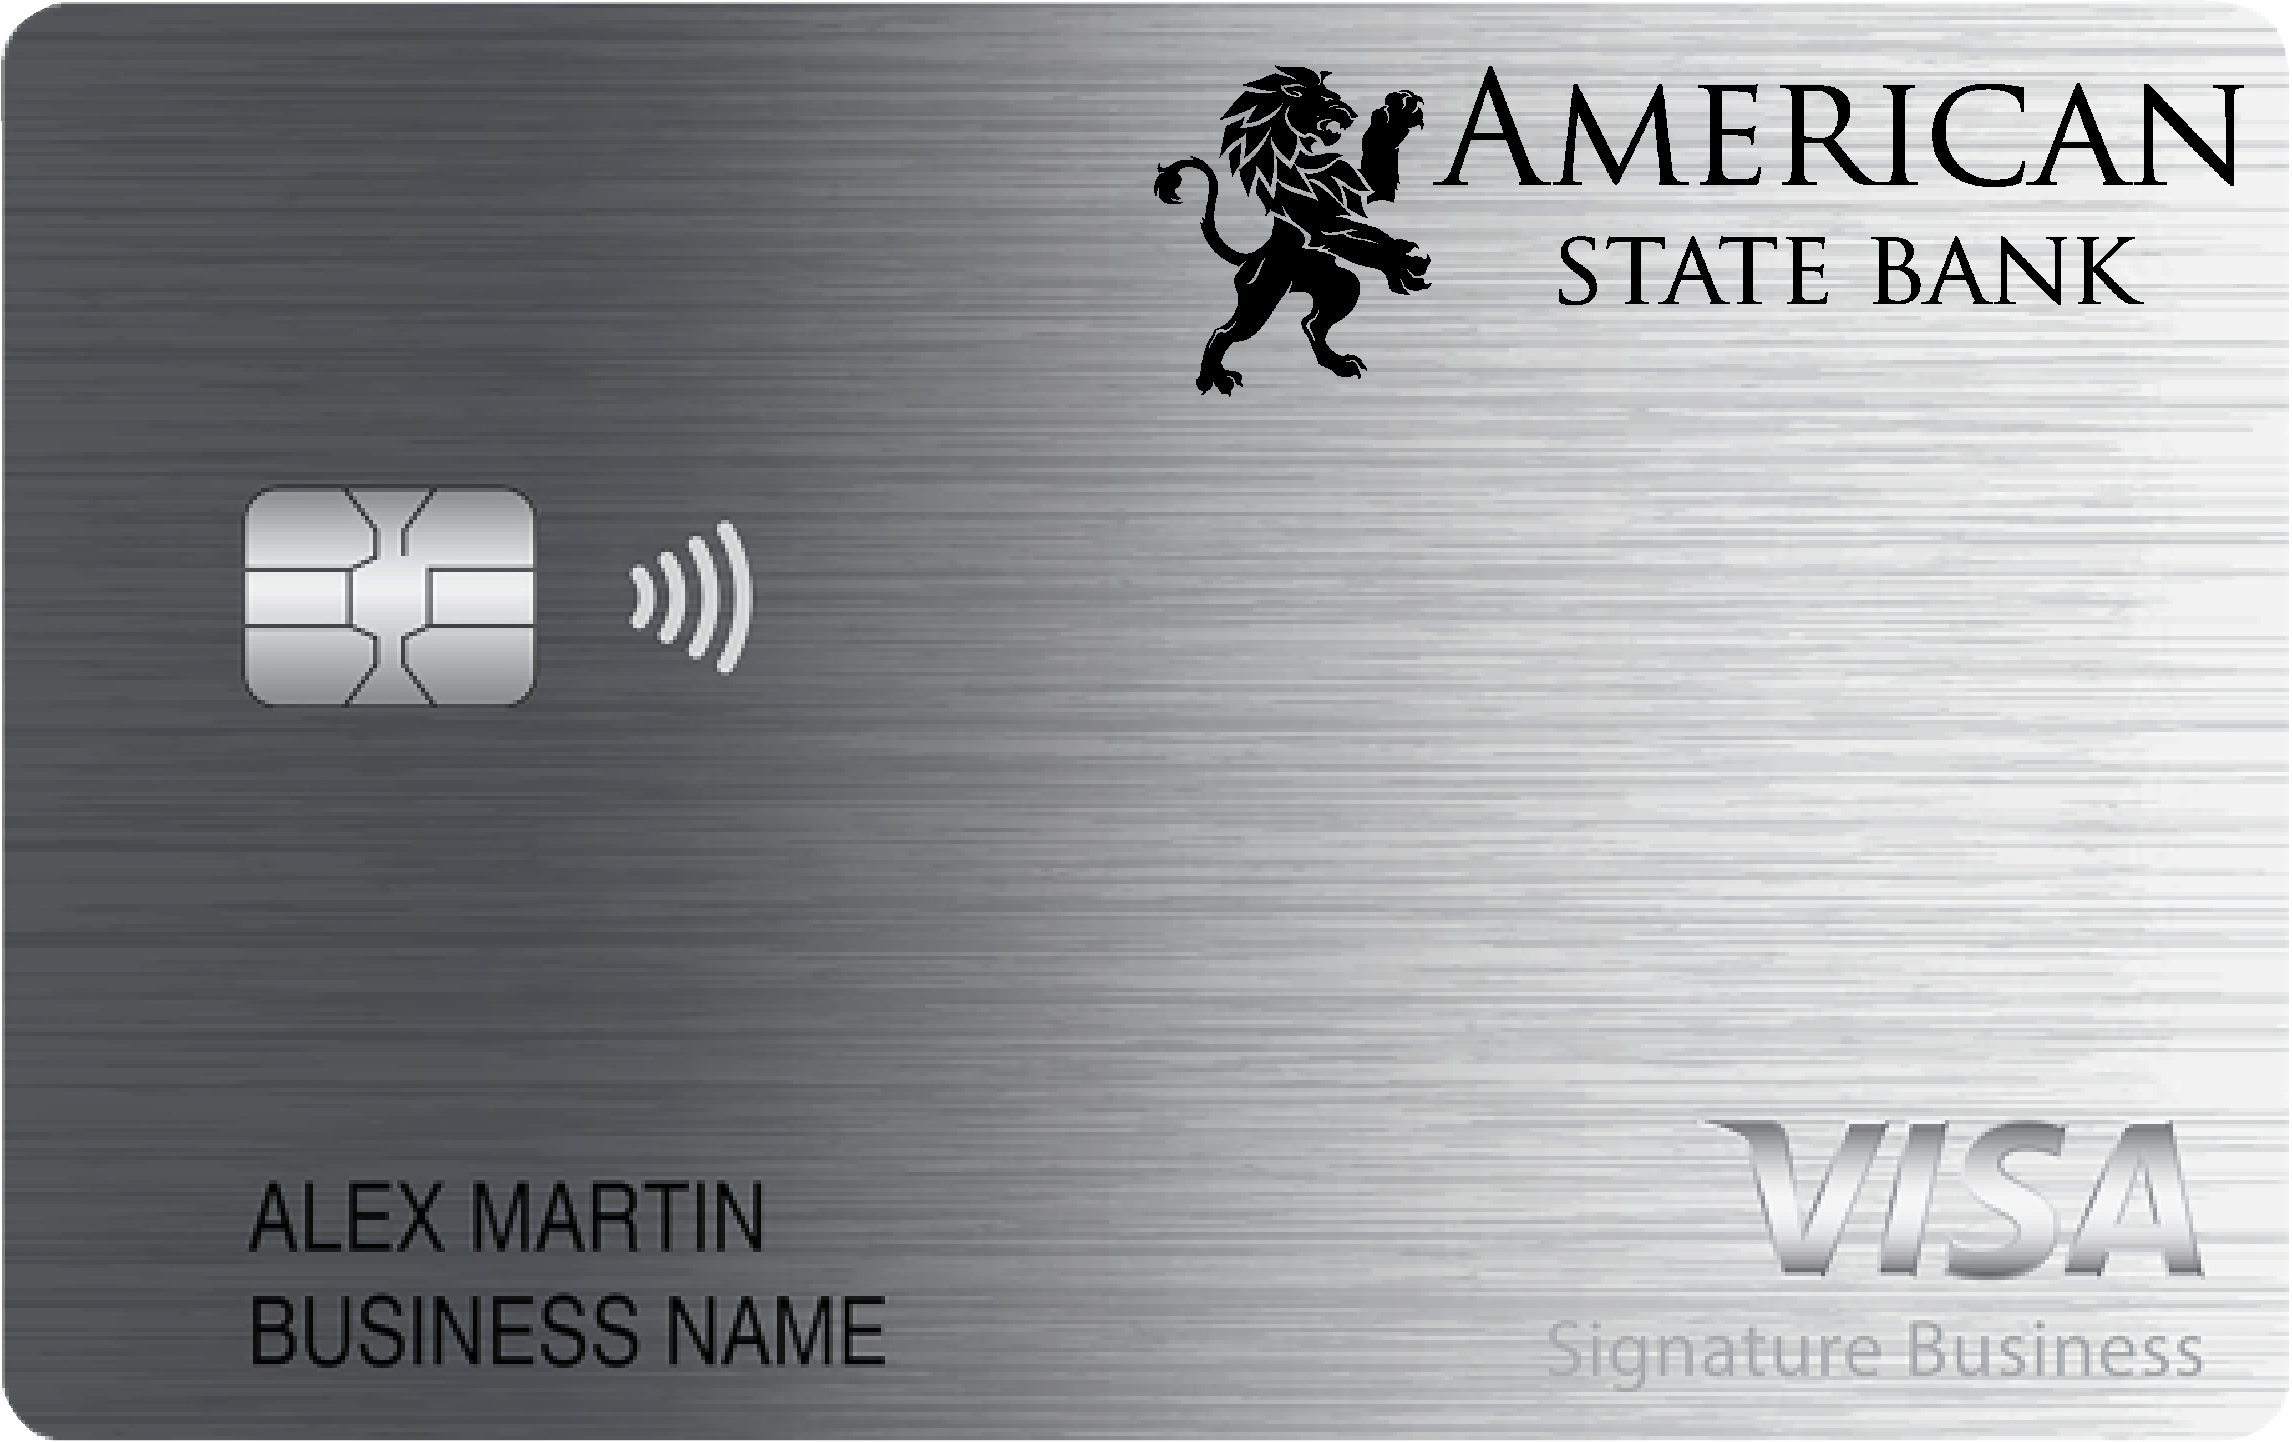 American State Bank Smart Business Rewards Card